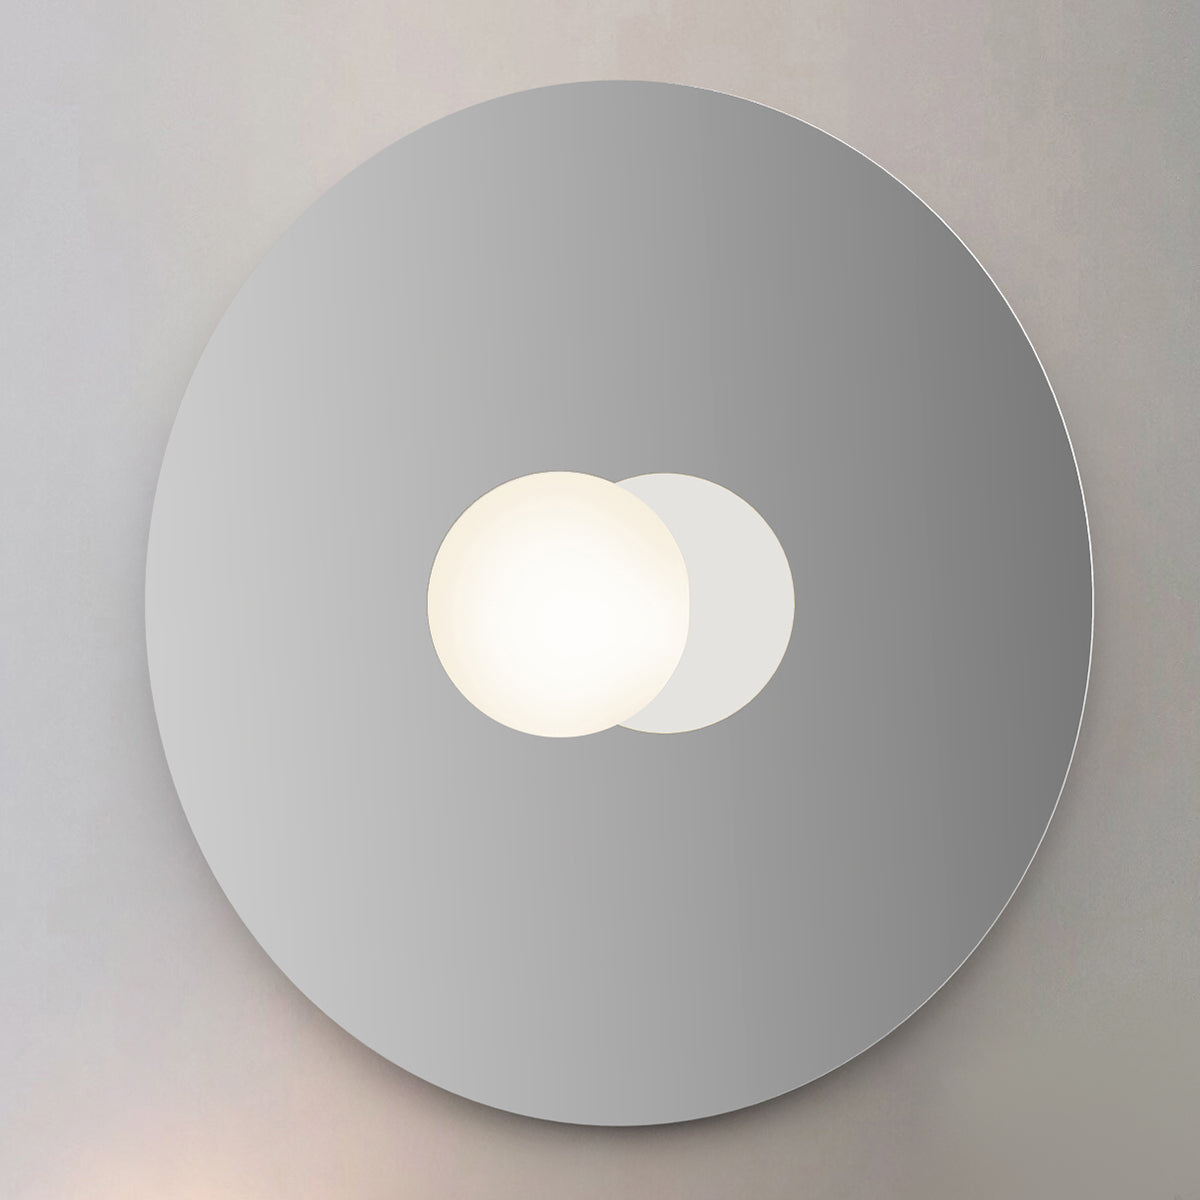 Pablo Design Bola Disc Flush Wall-Ceiling Light